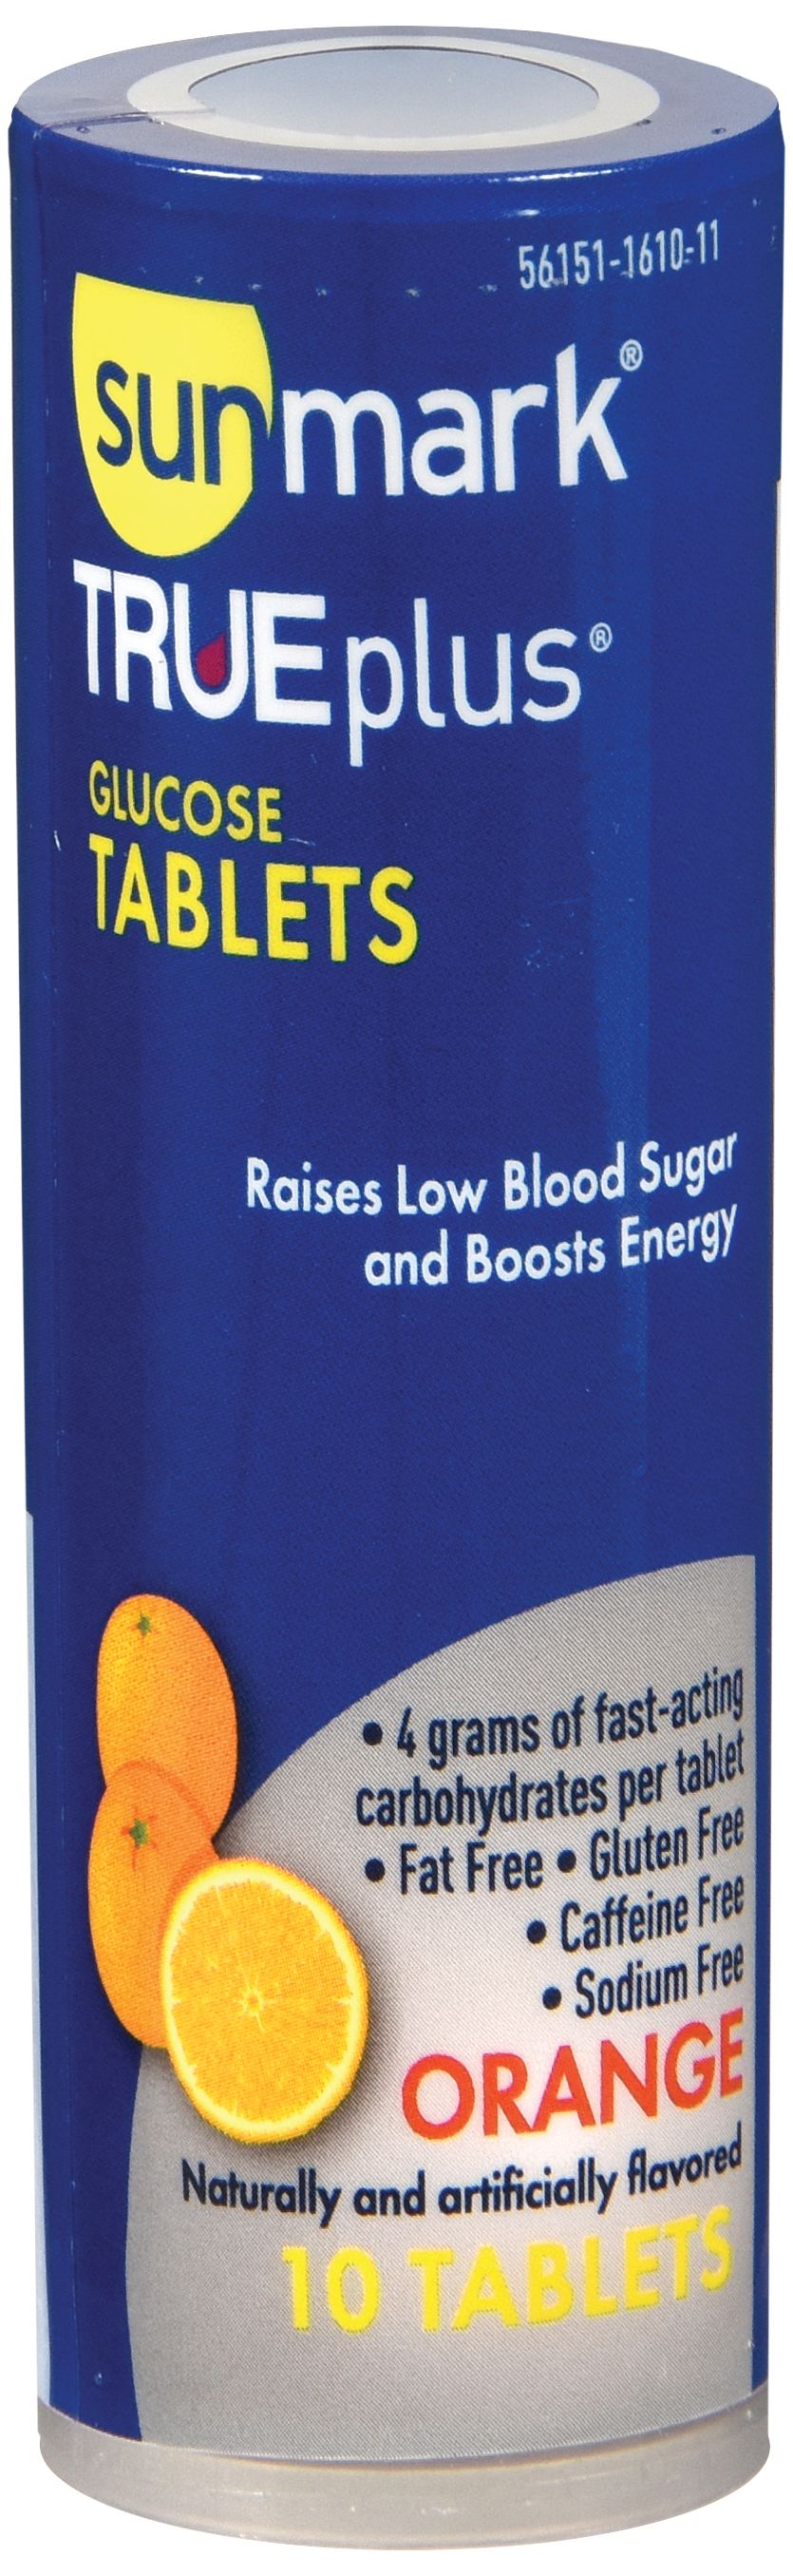 Sunmark TRUEplus Glucose Tablets, Orange, 10 Tablets - 6 Pack